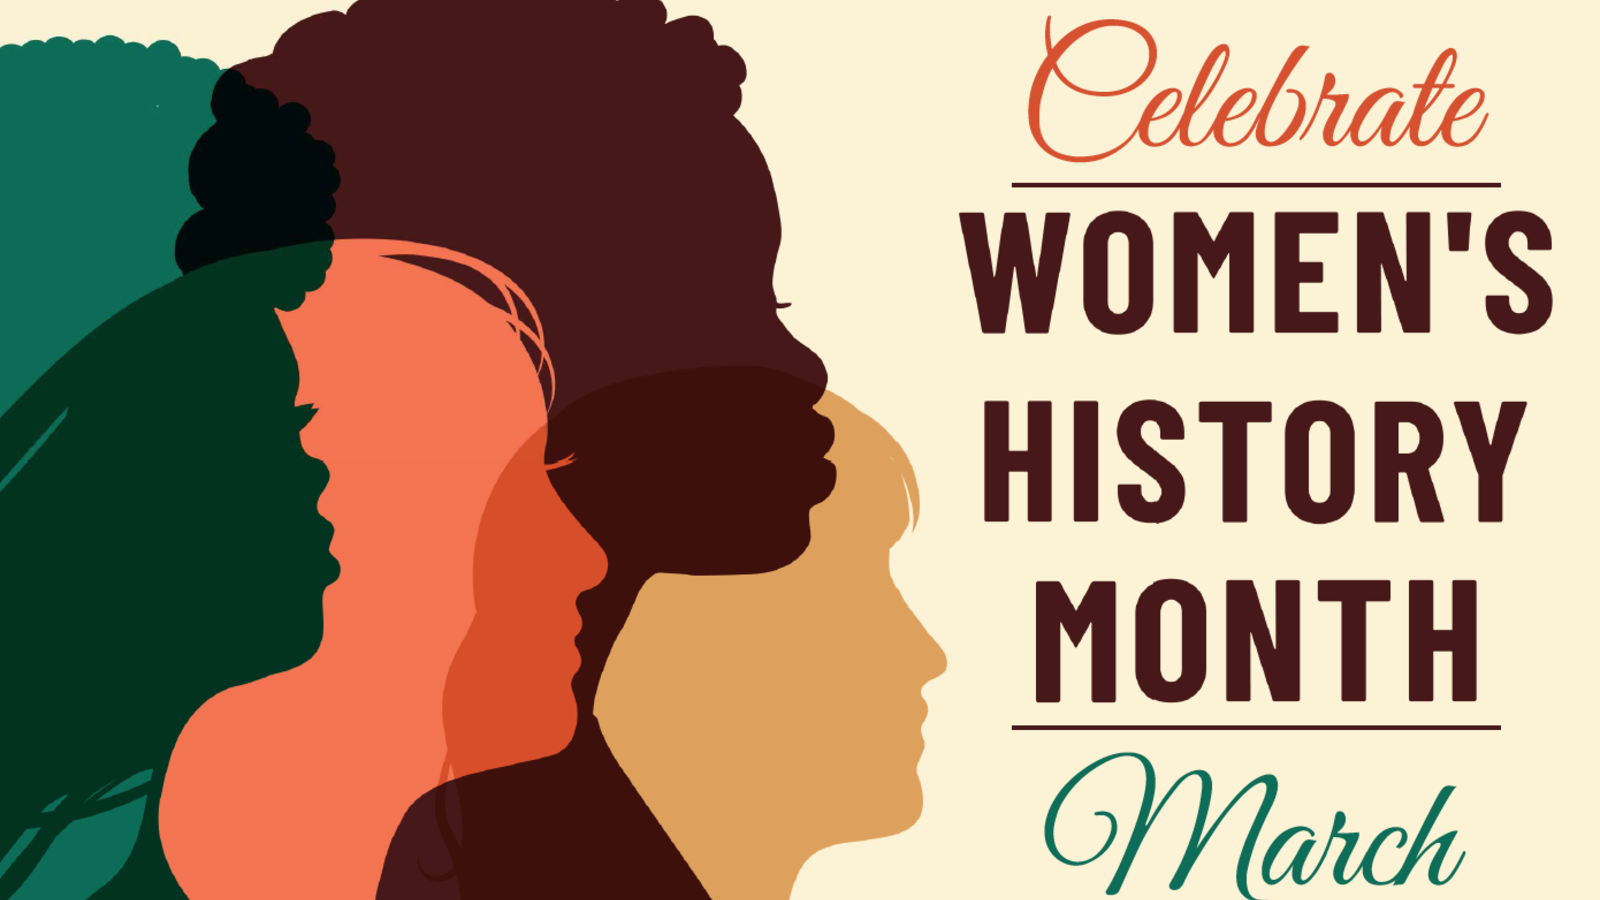 North Carolina Central University Celebrates Women’s History Month